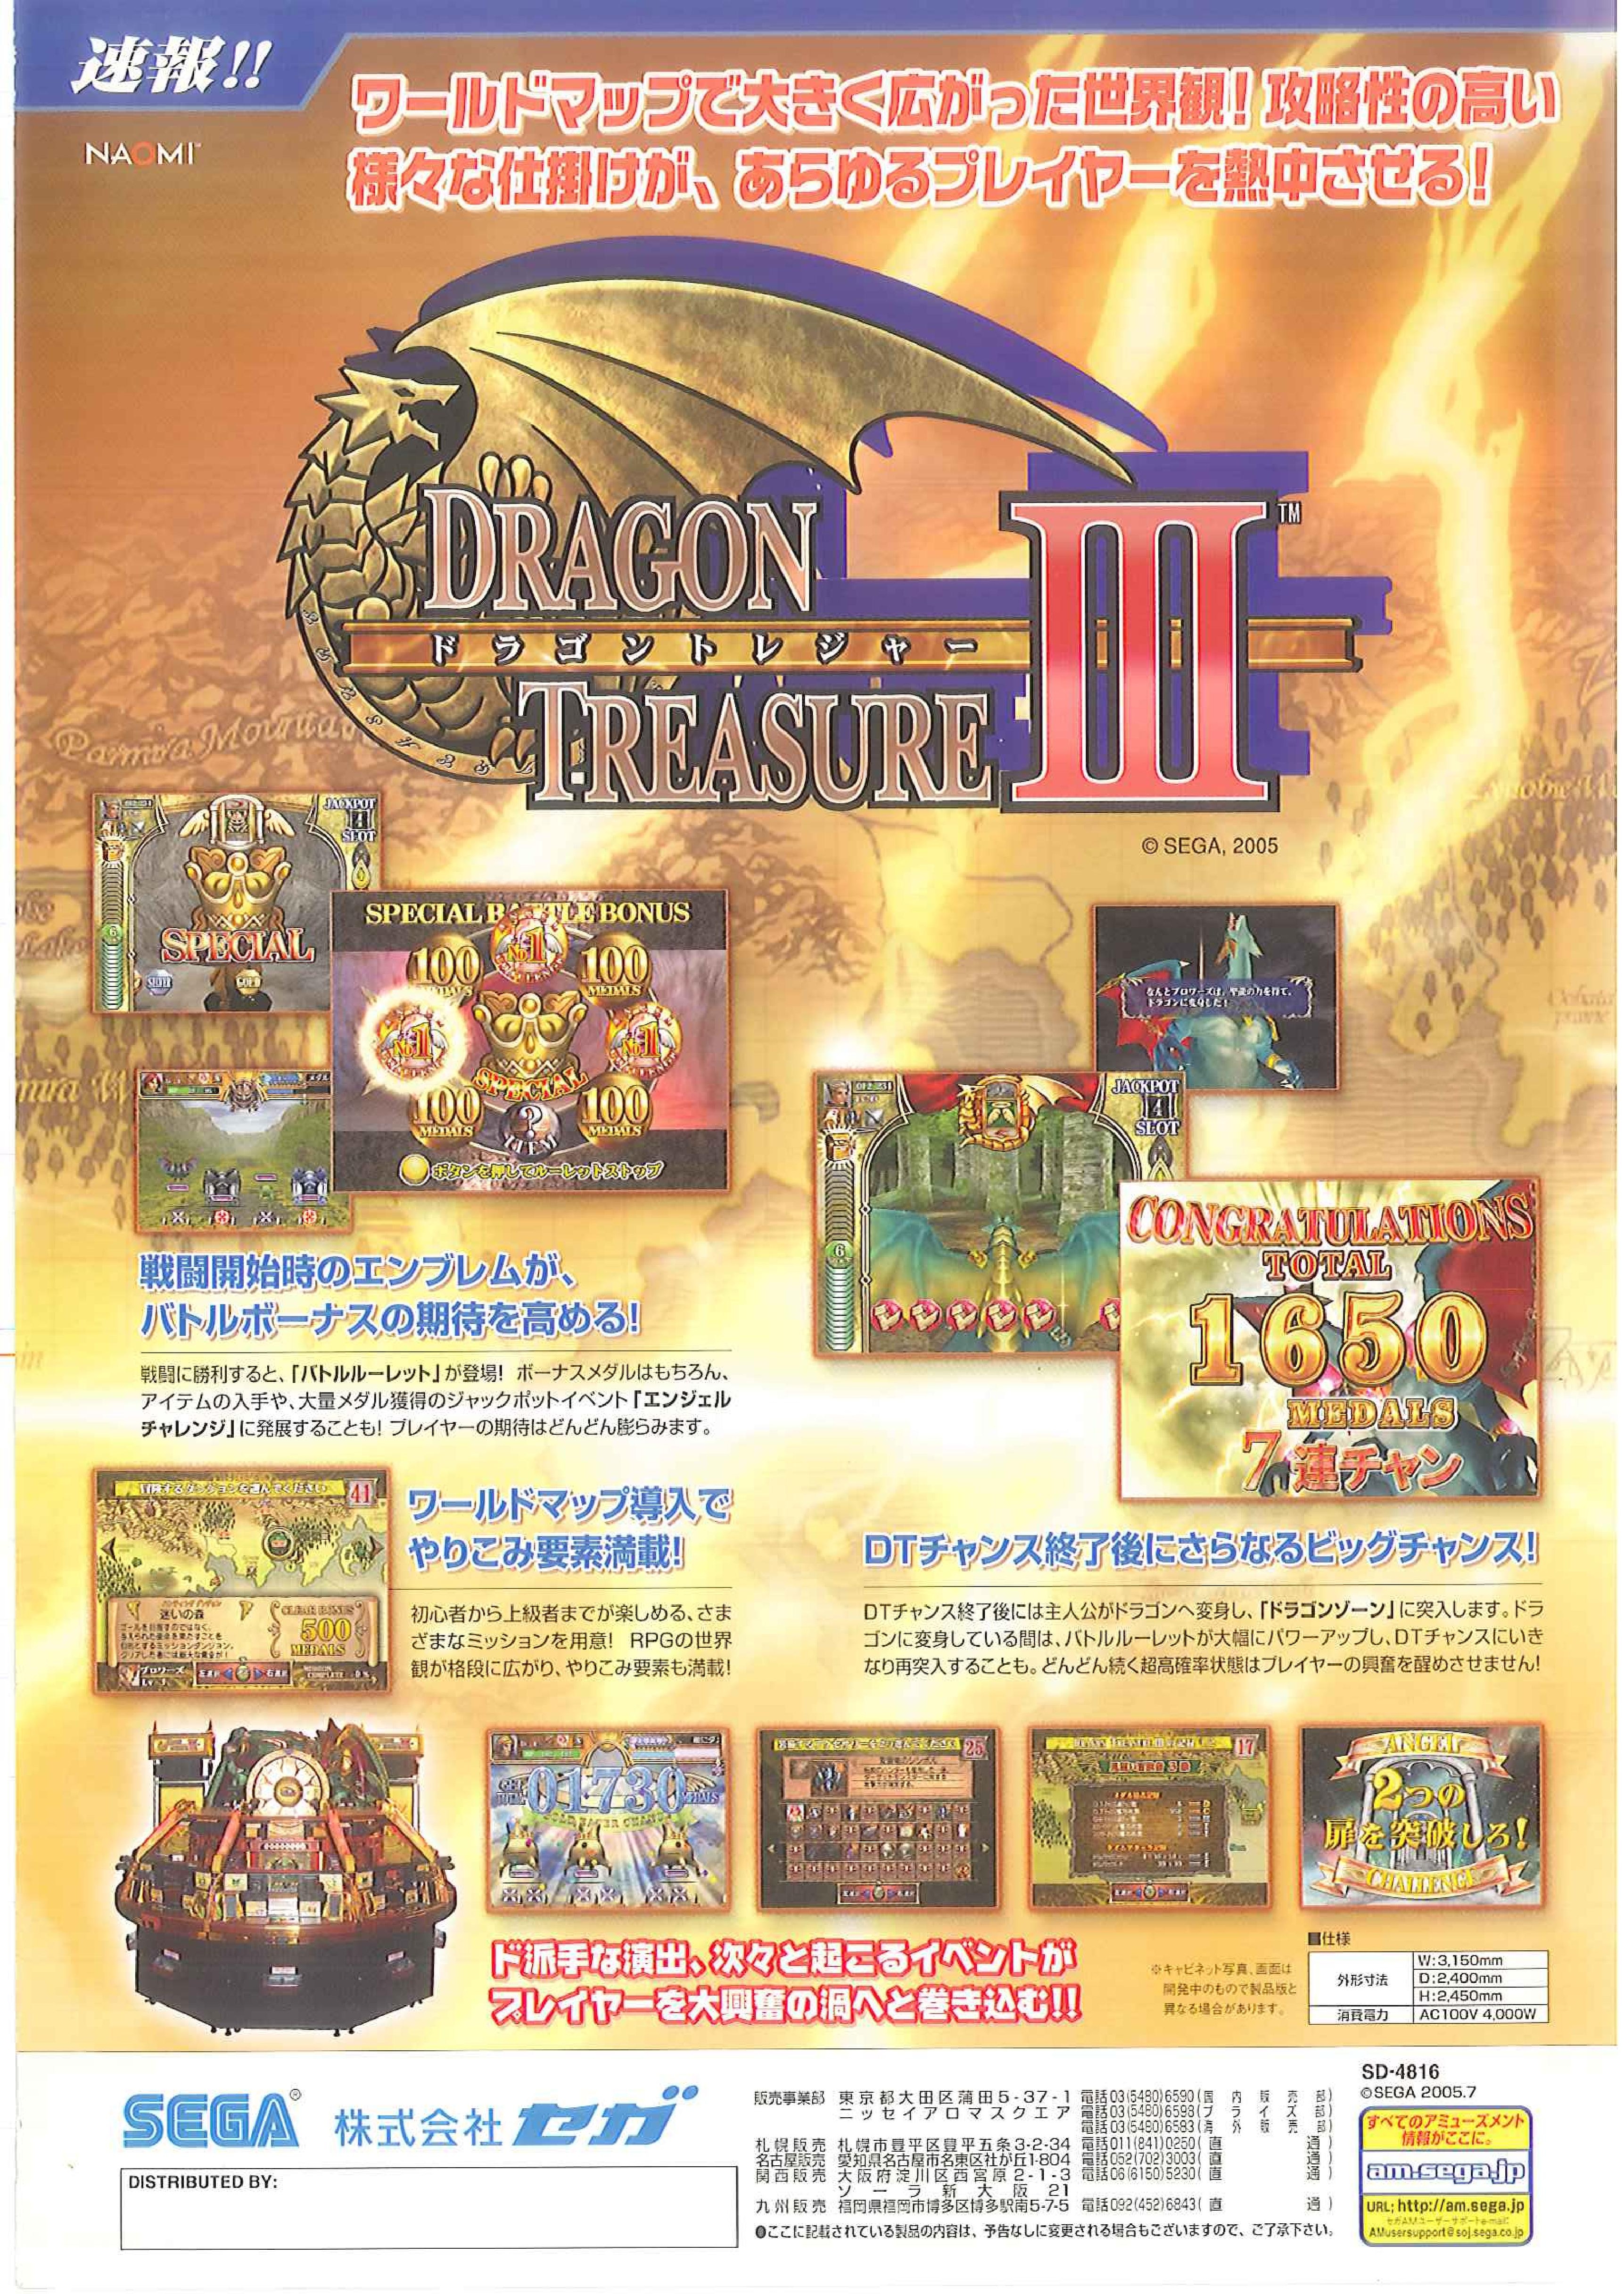 DragonTreasure3 Arcade JP Flyer.pdf